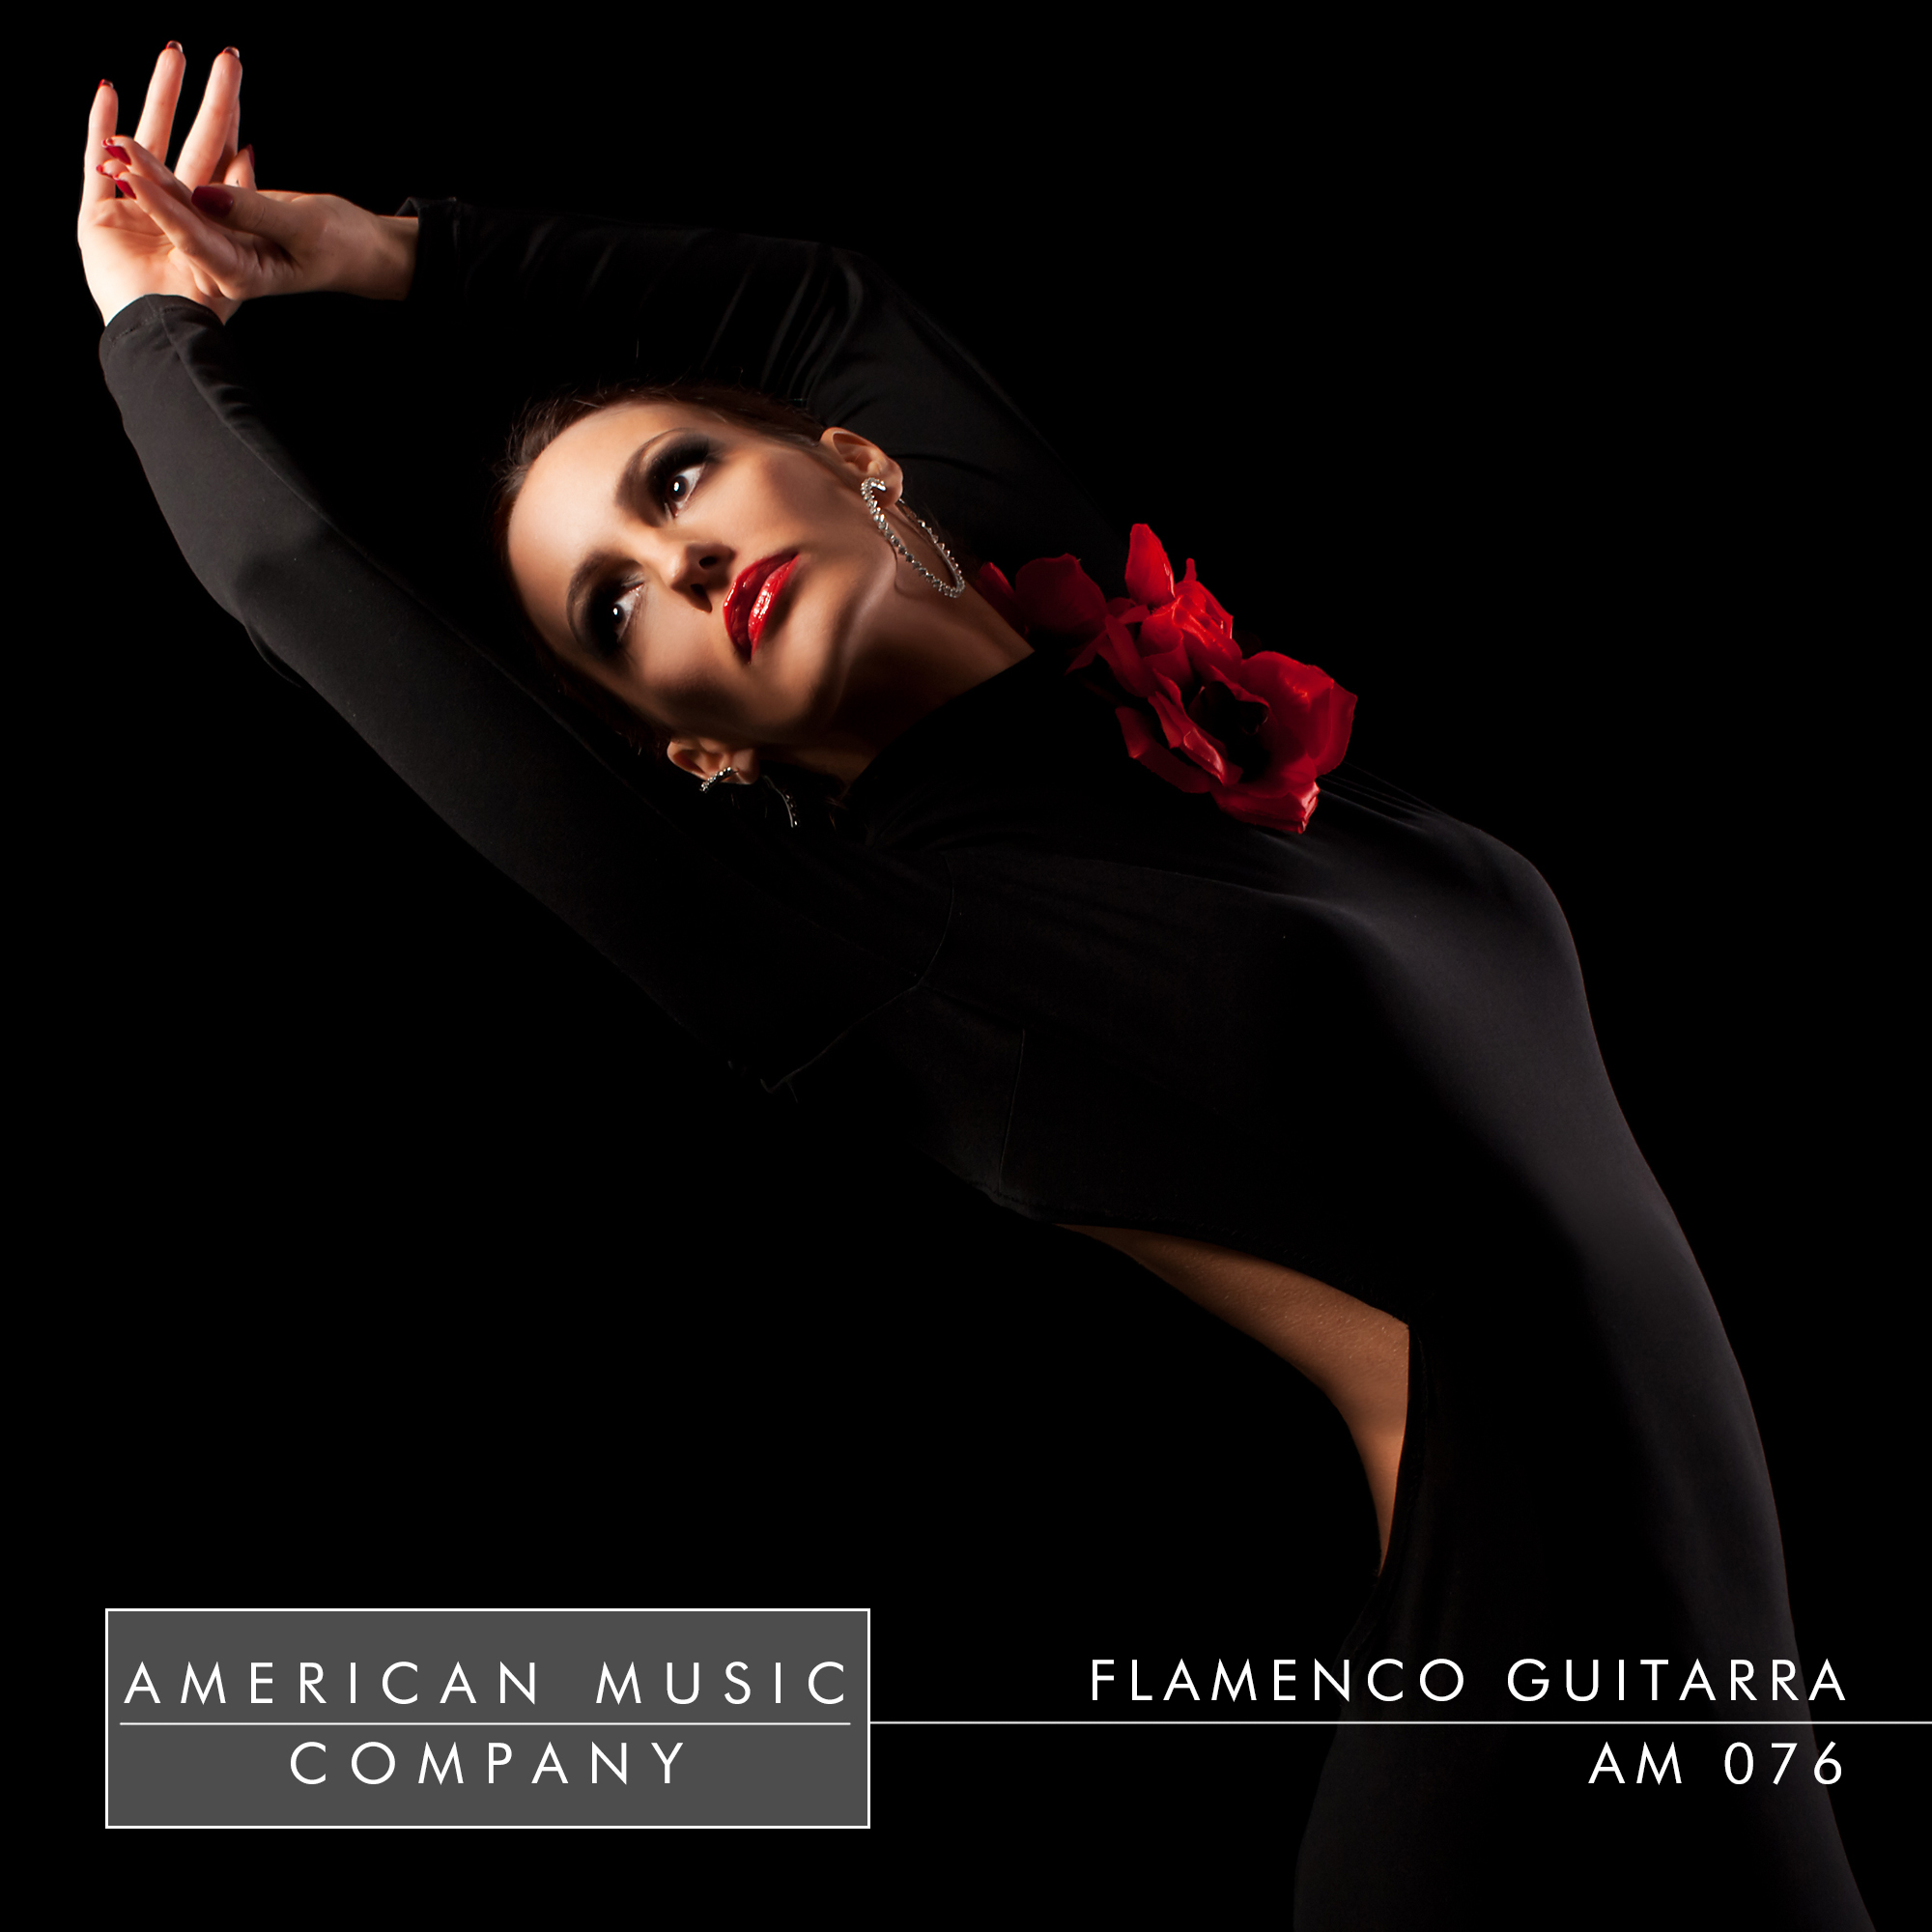 Flamenco Guitarra